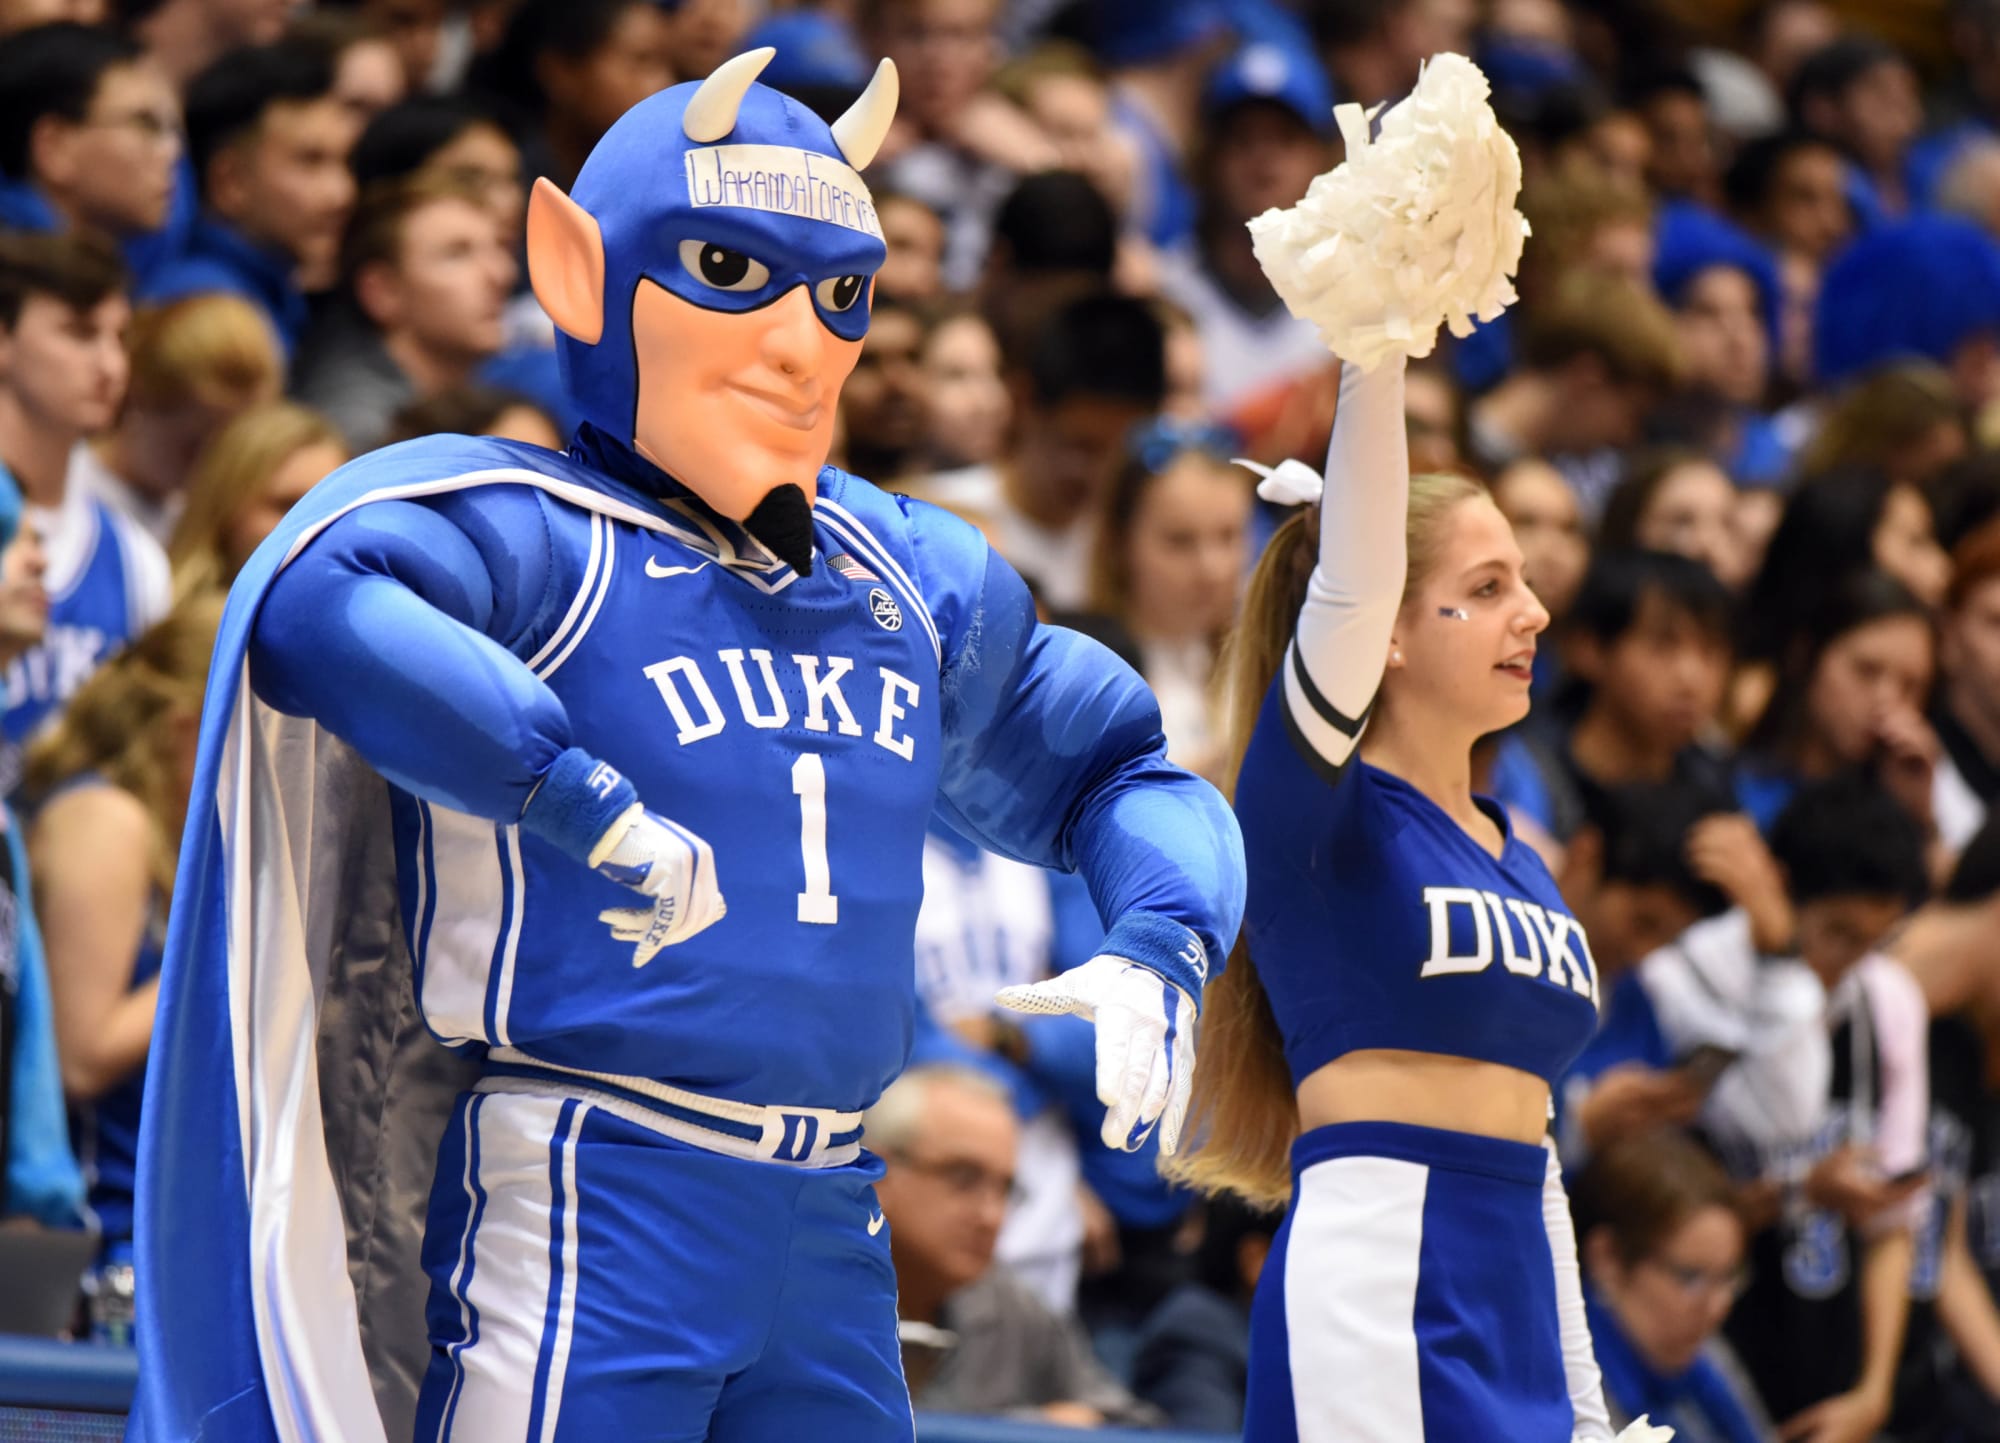 Five-star recruit displays Duke basketball threads after official visit